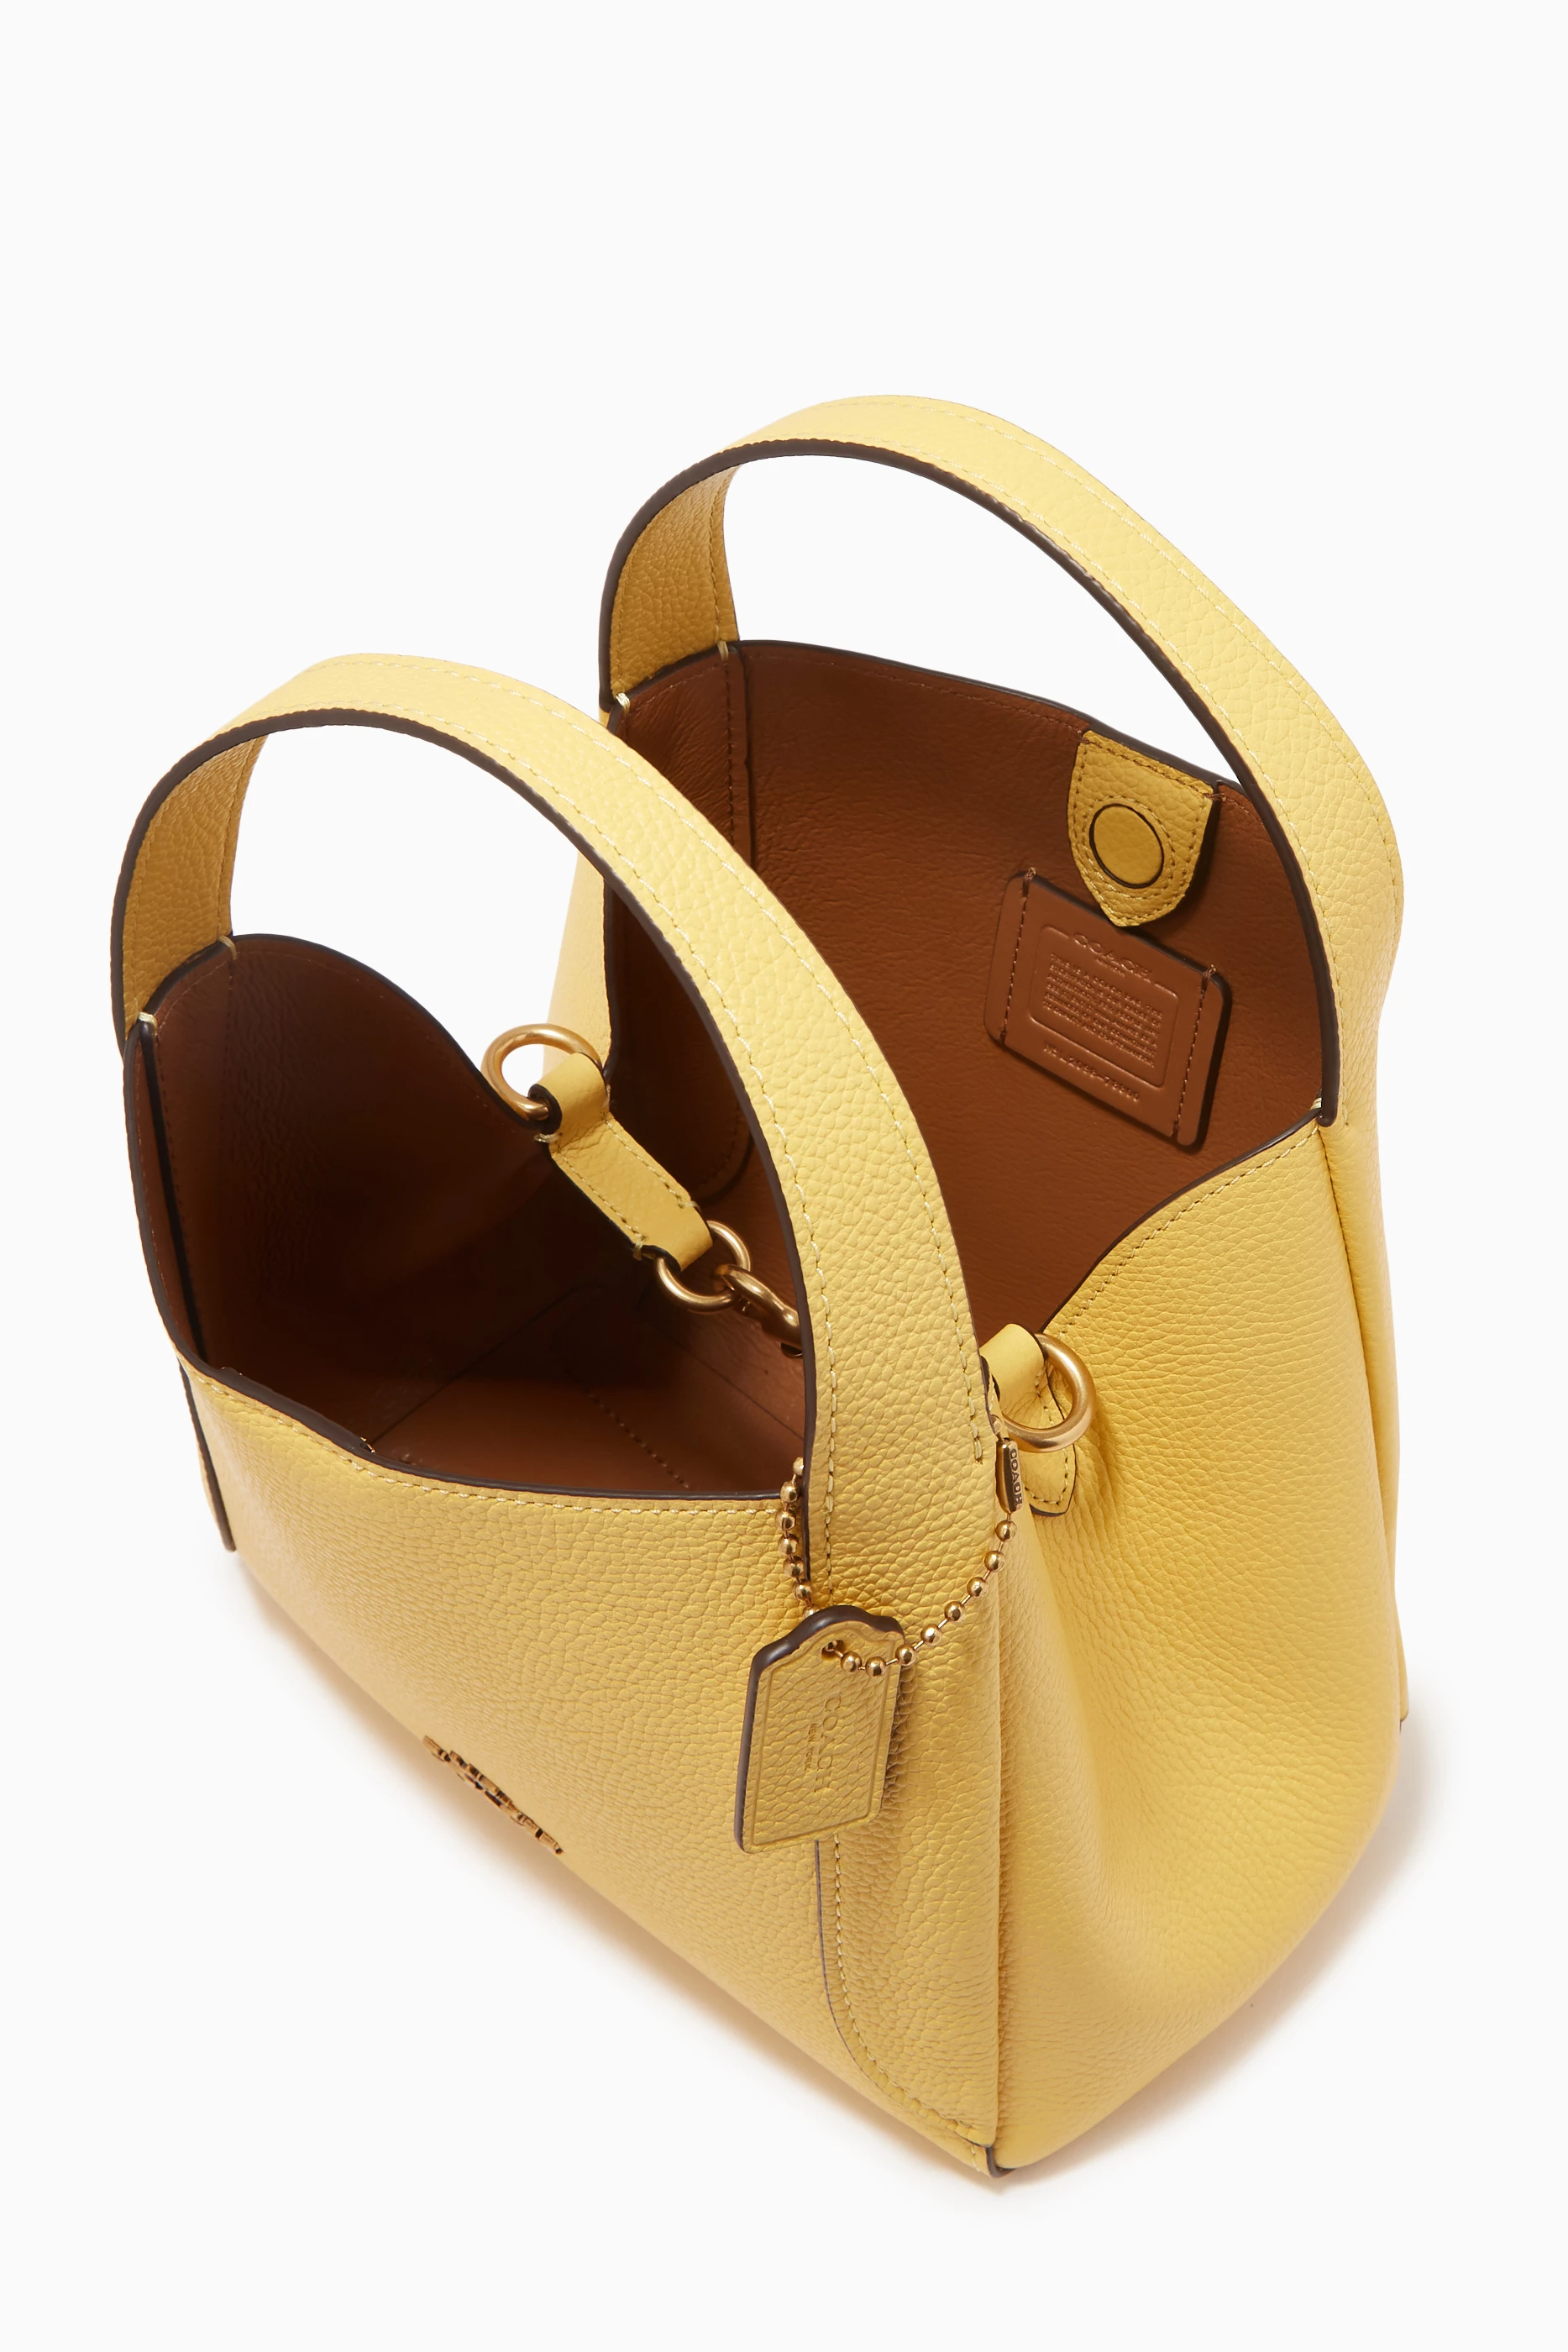 Buy Coach White Hadley Hobo 21 Bag in Pebble Leather for WOMEN in Kuwait